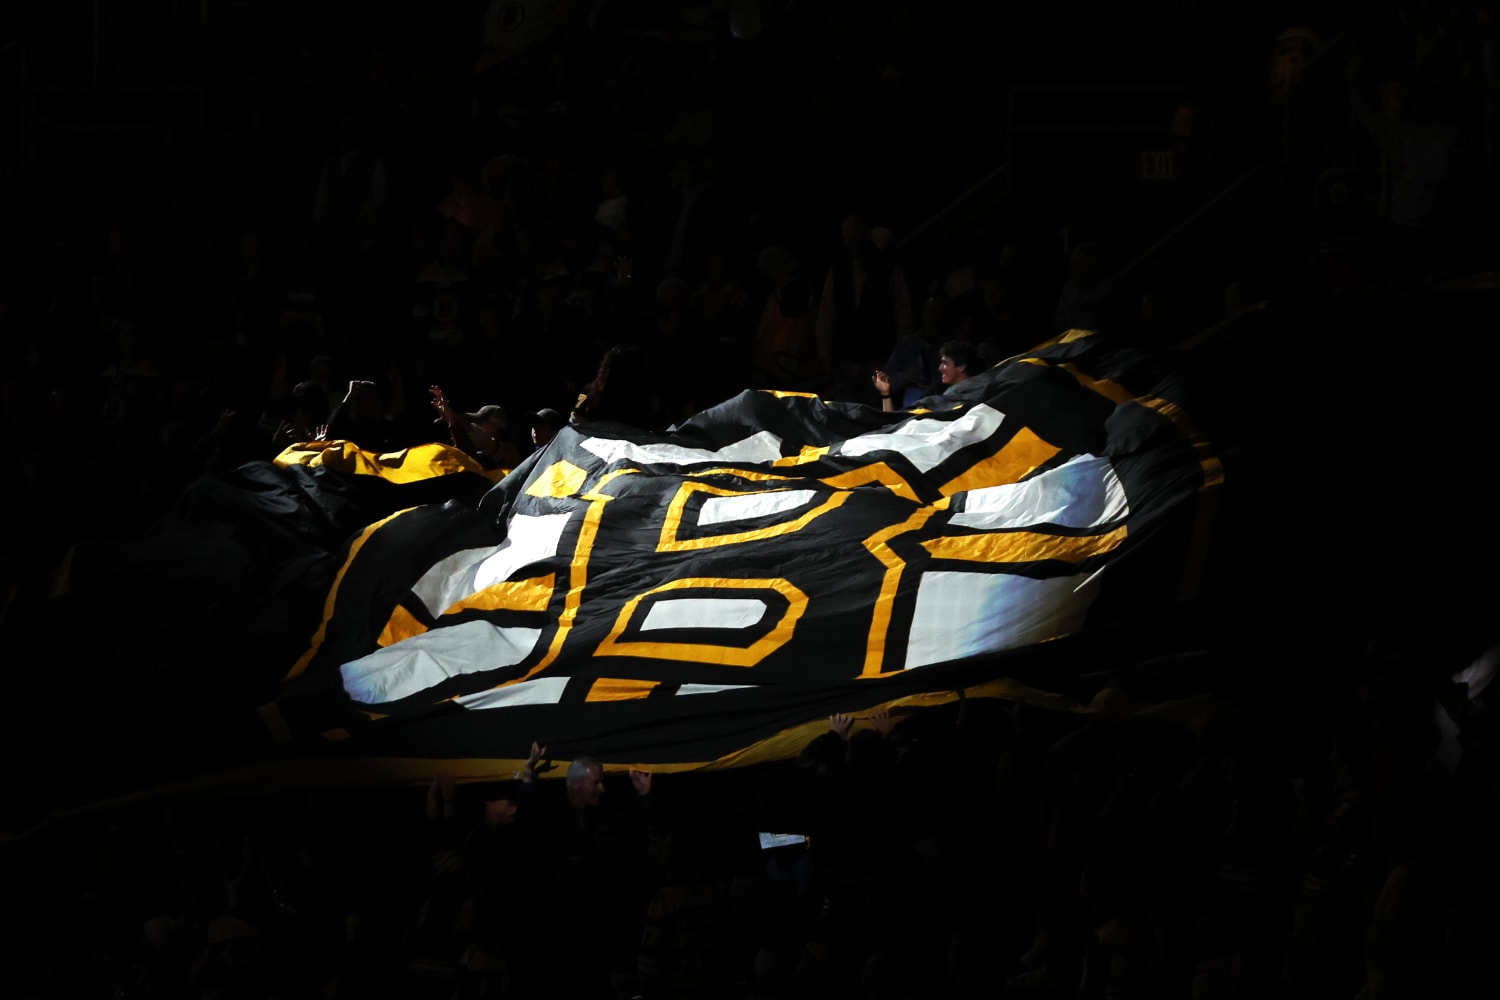 Bruins reportedly set to bring back one wildly polarizing logo